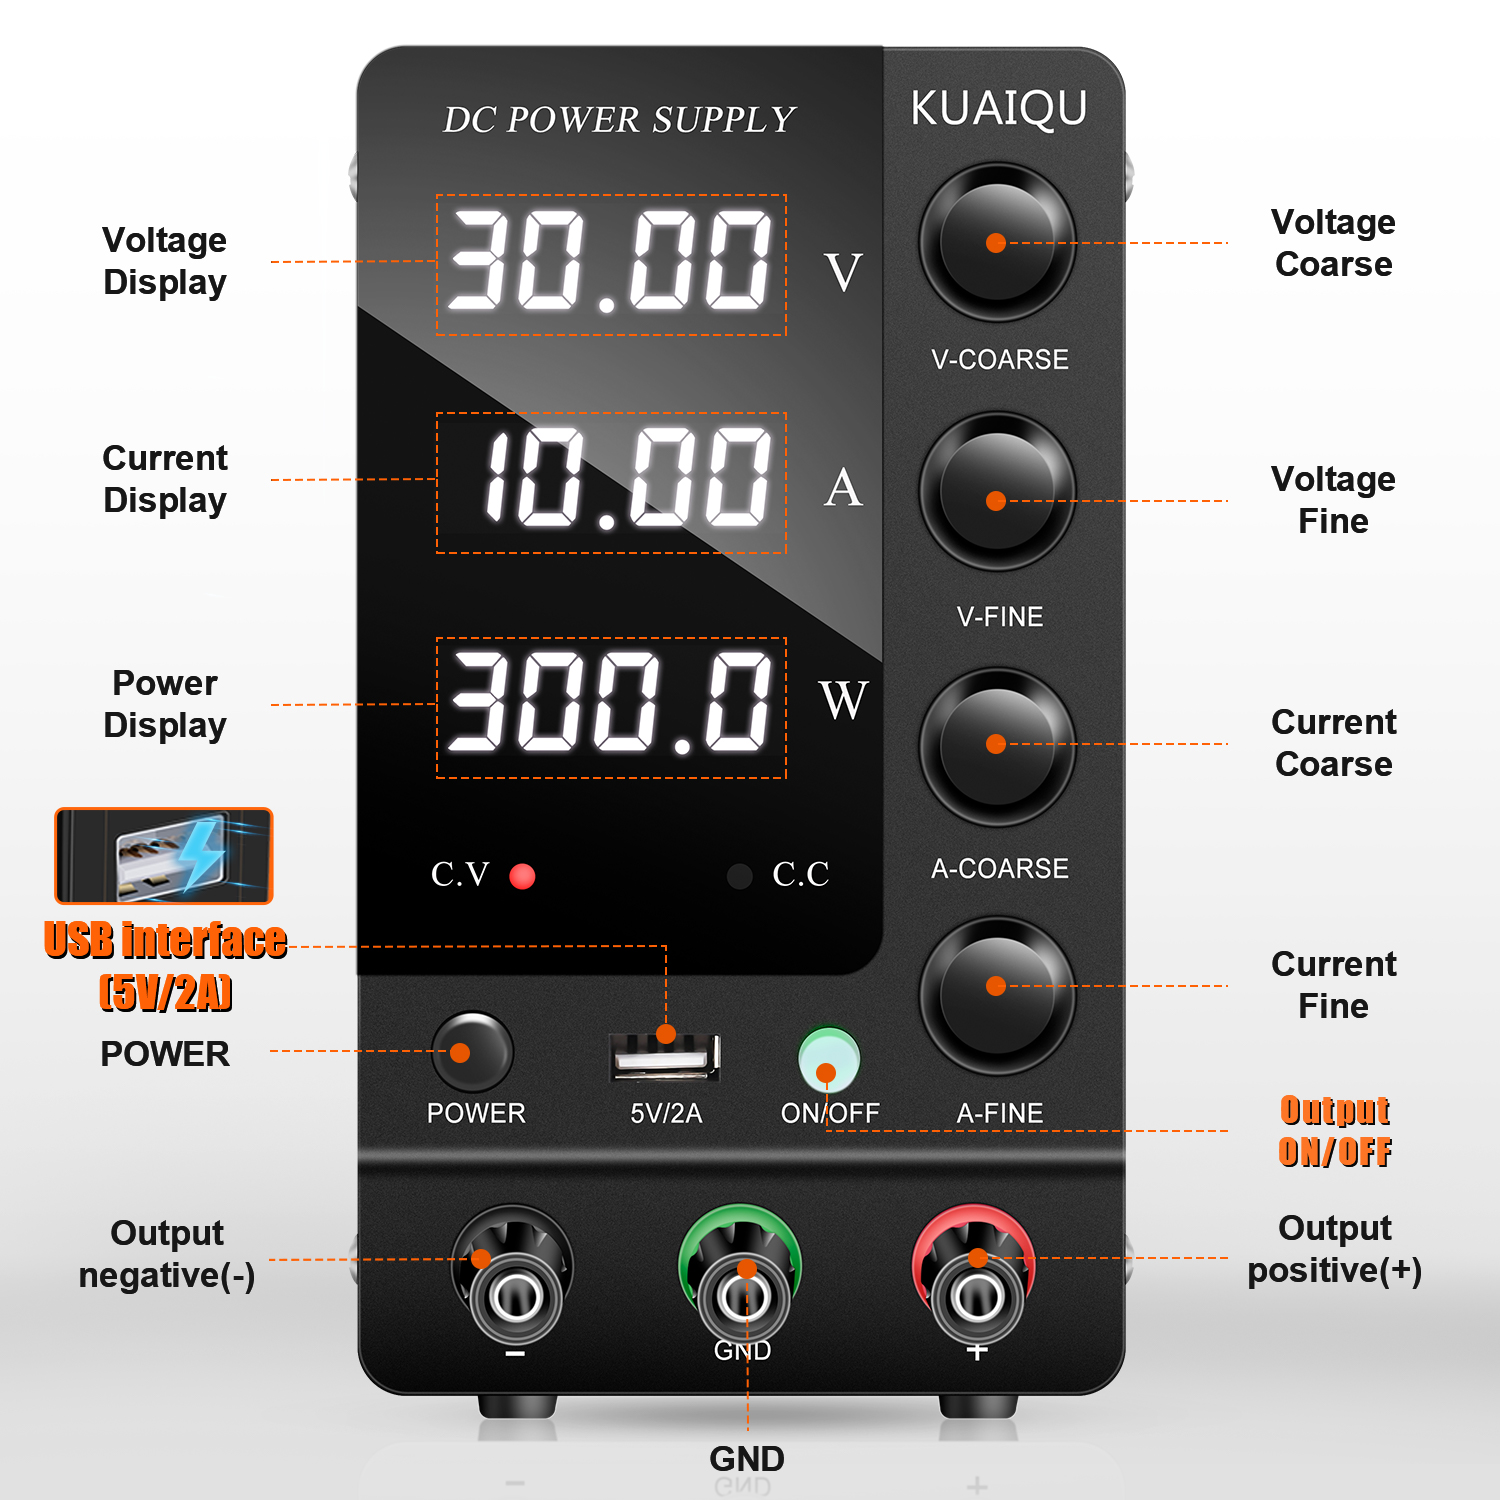 KUAIQU-SPS-C3010-USB-Adjustable-DC-Power-Supply-30V-10A-Laboratory-Lab-Bench-Source-Digital-Voltage--1871078-3